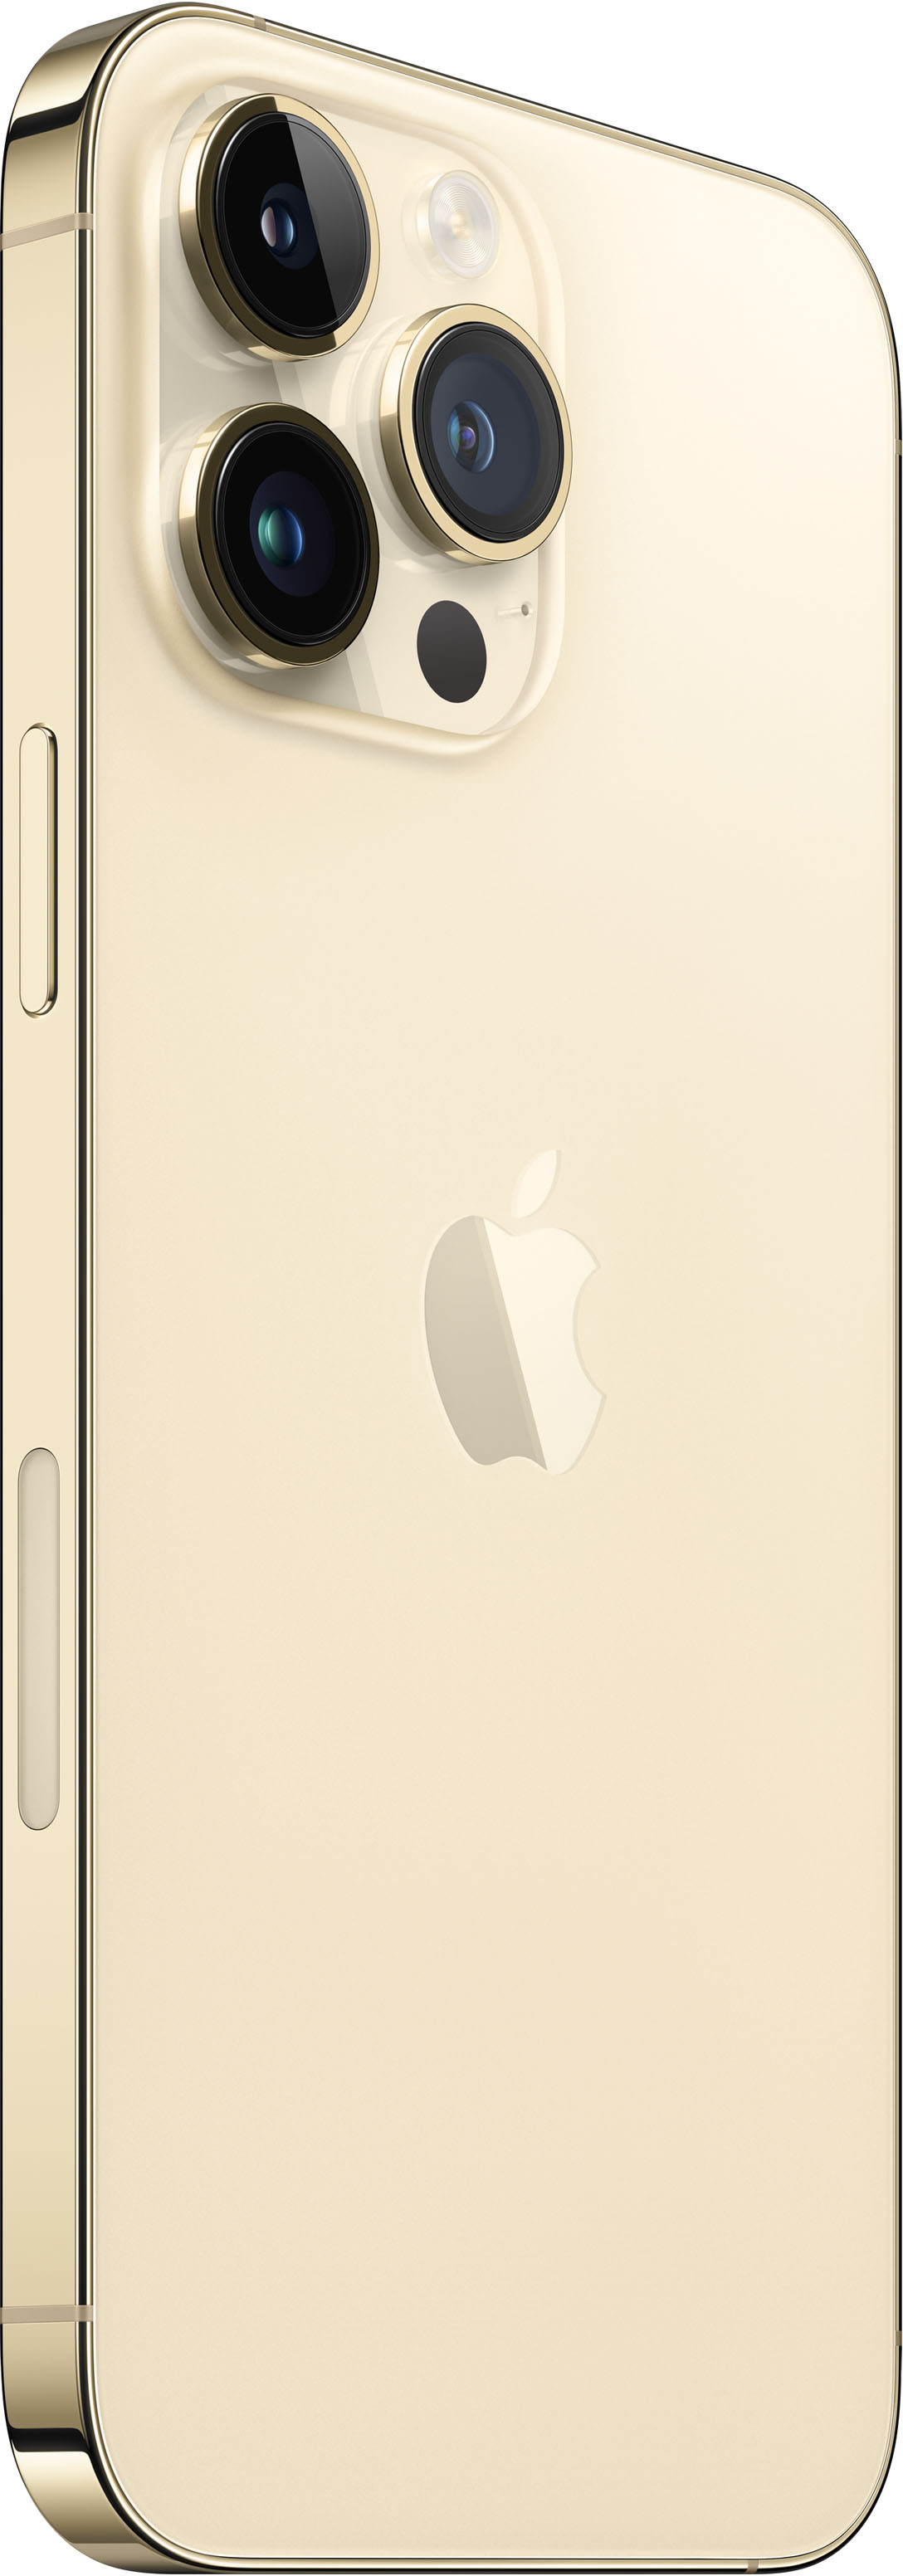 Apple iPhone 14 Pro Max 256GB Gold (Verizon) MQ8V3LL/A - Best Buy